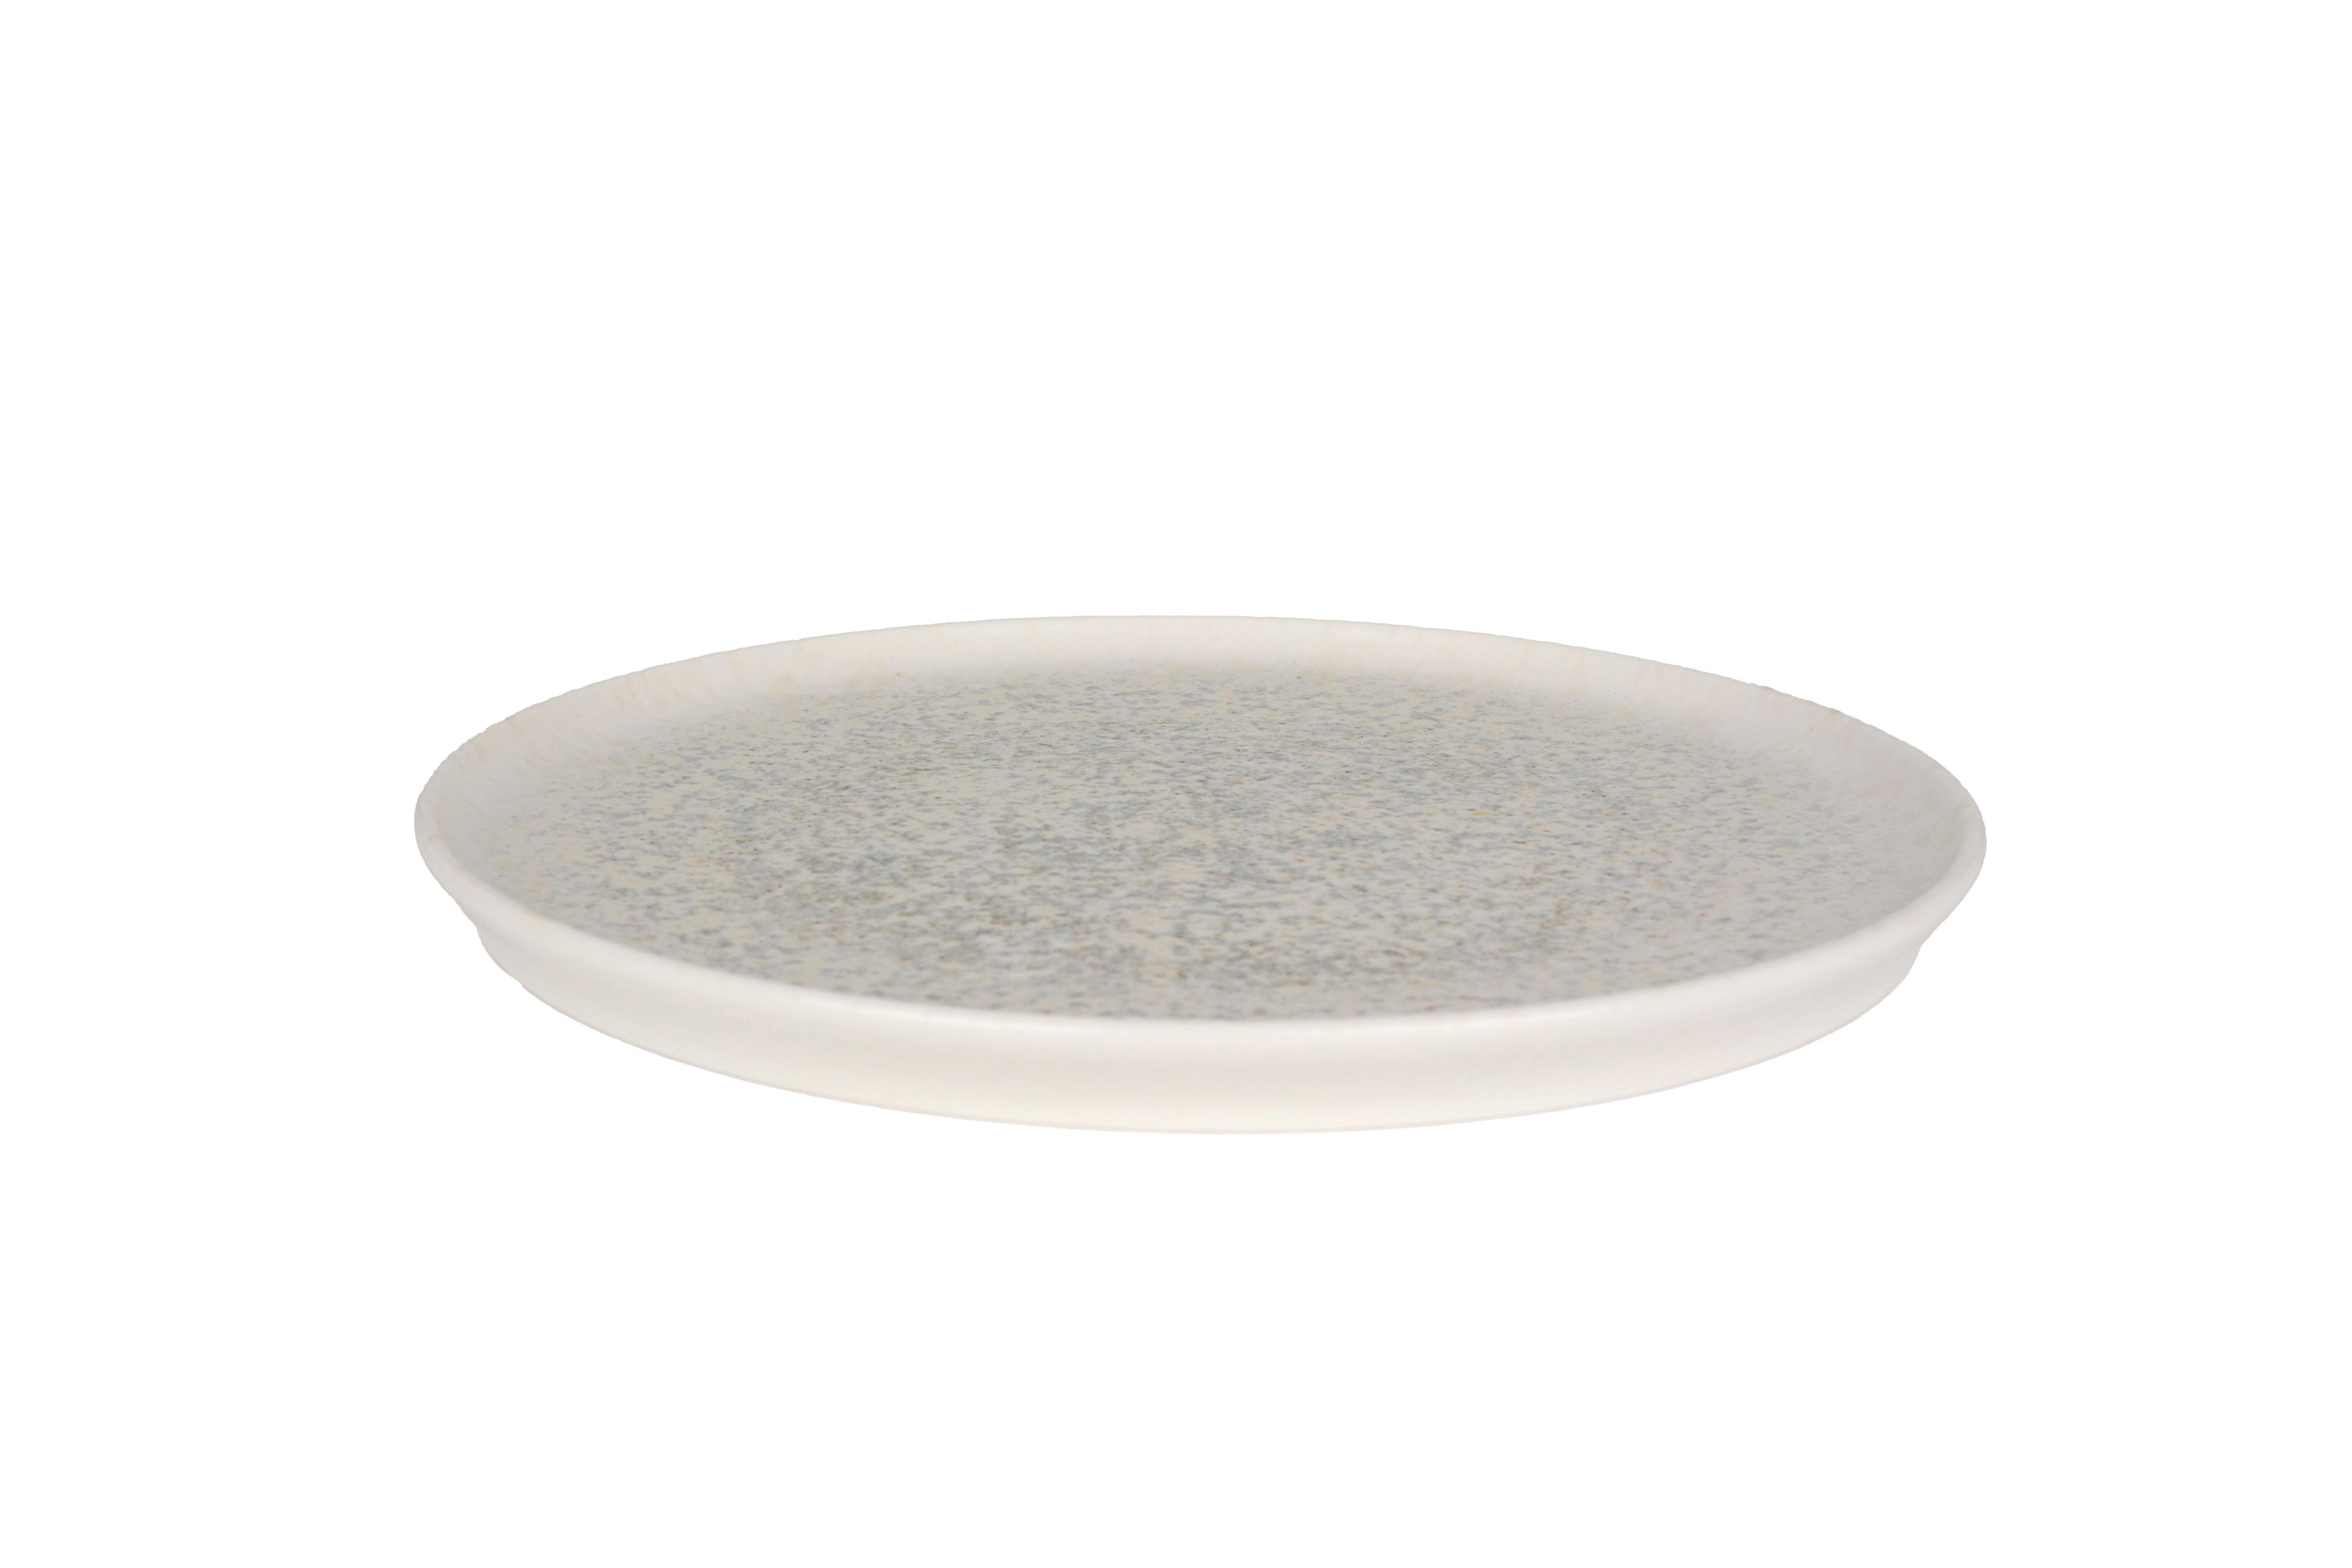 Bonna Piatto Da Dessert - Lunar White -  Porcellana - 16 cm- set di 6  